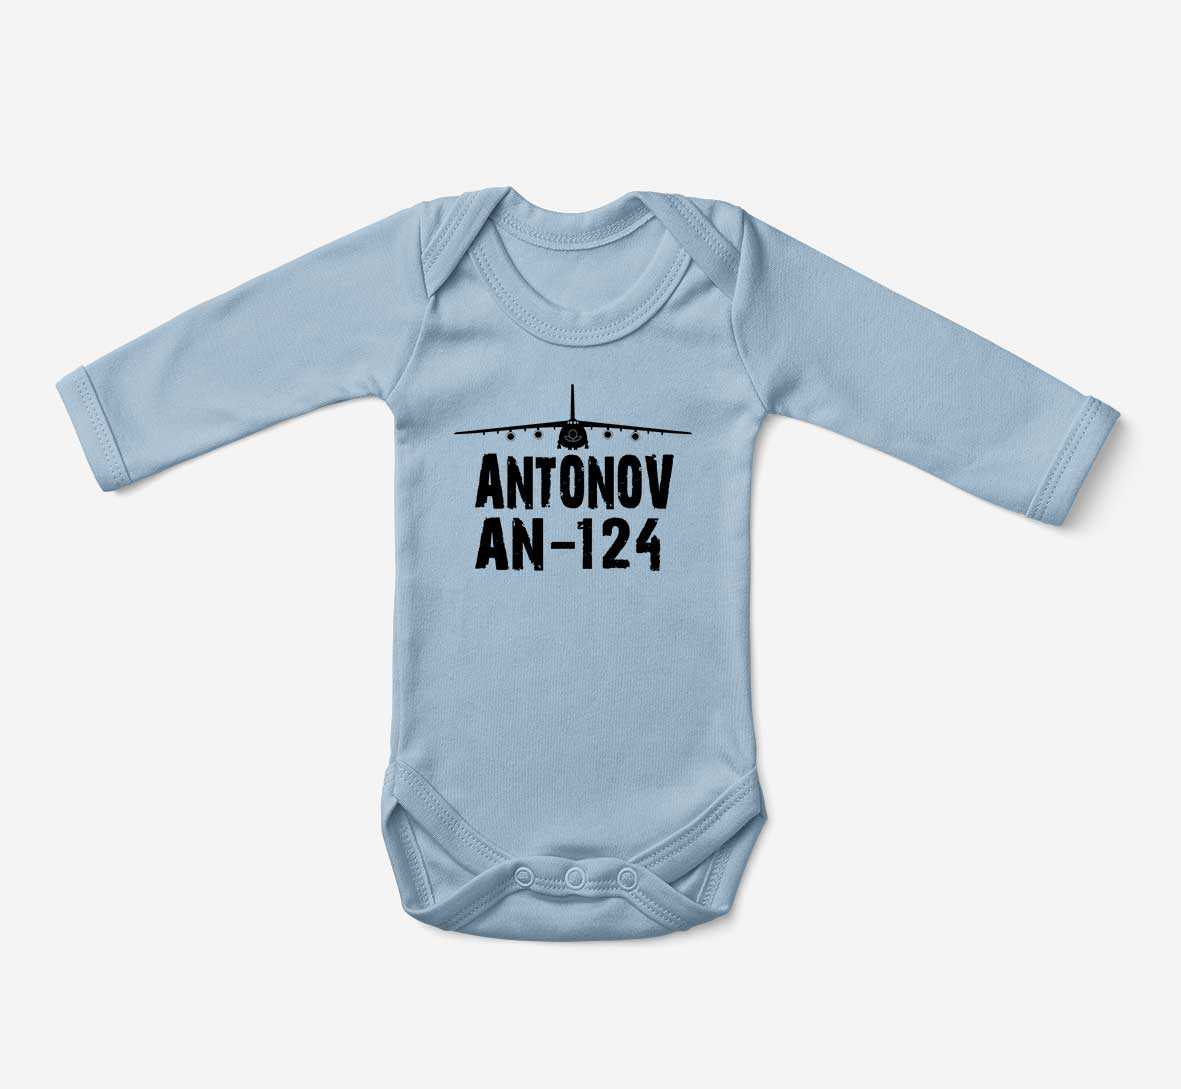 Antonov AN-124 & Plane Designed Baby Bodysuits